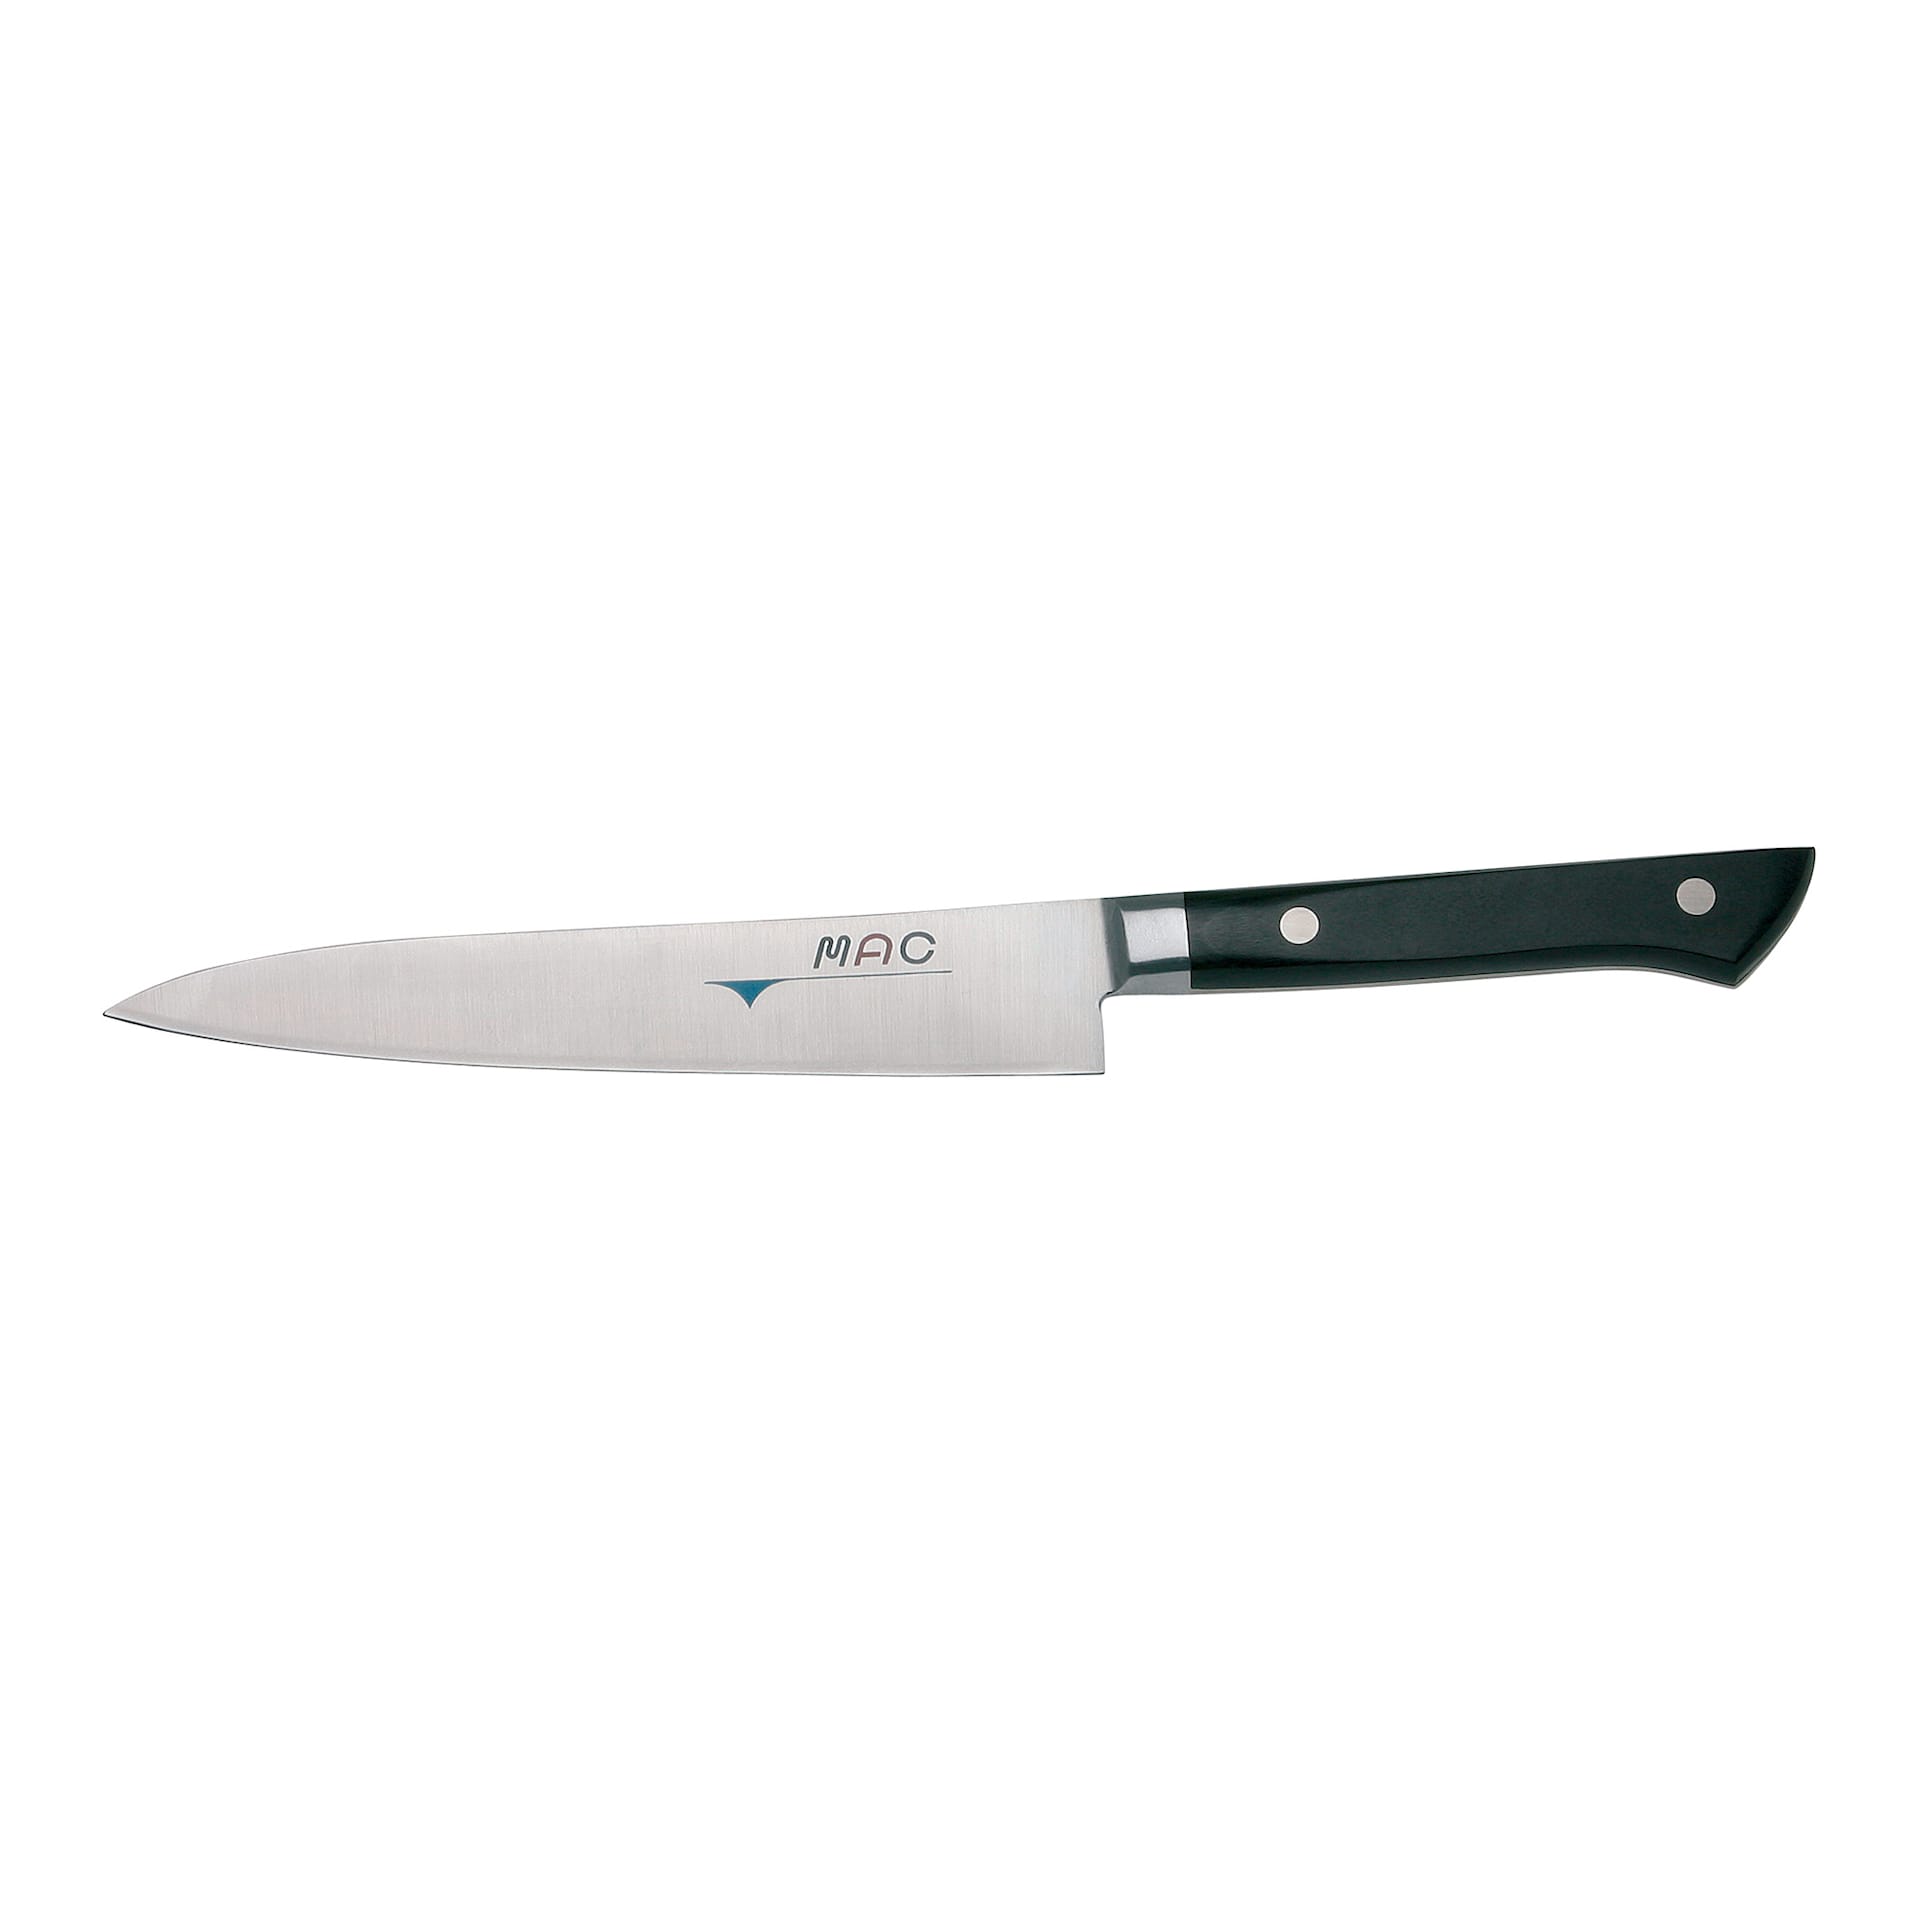 Pro - Vegetable knife, 15.5 cm - MAC - NO GA